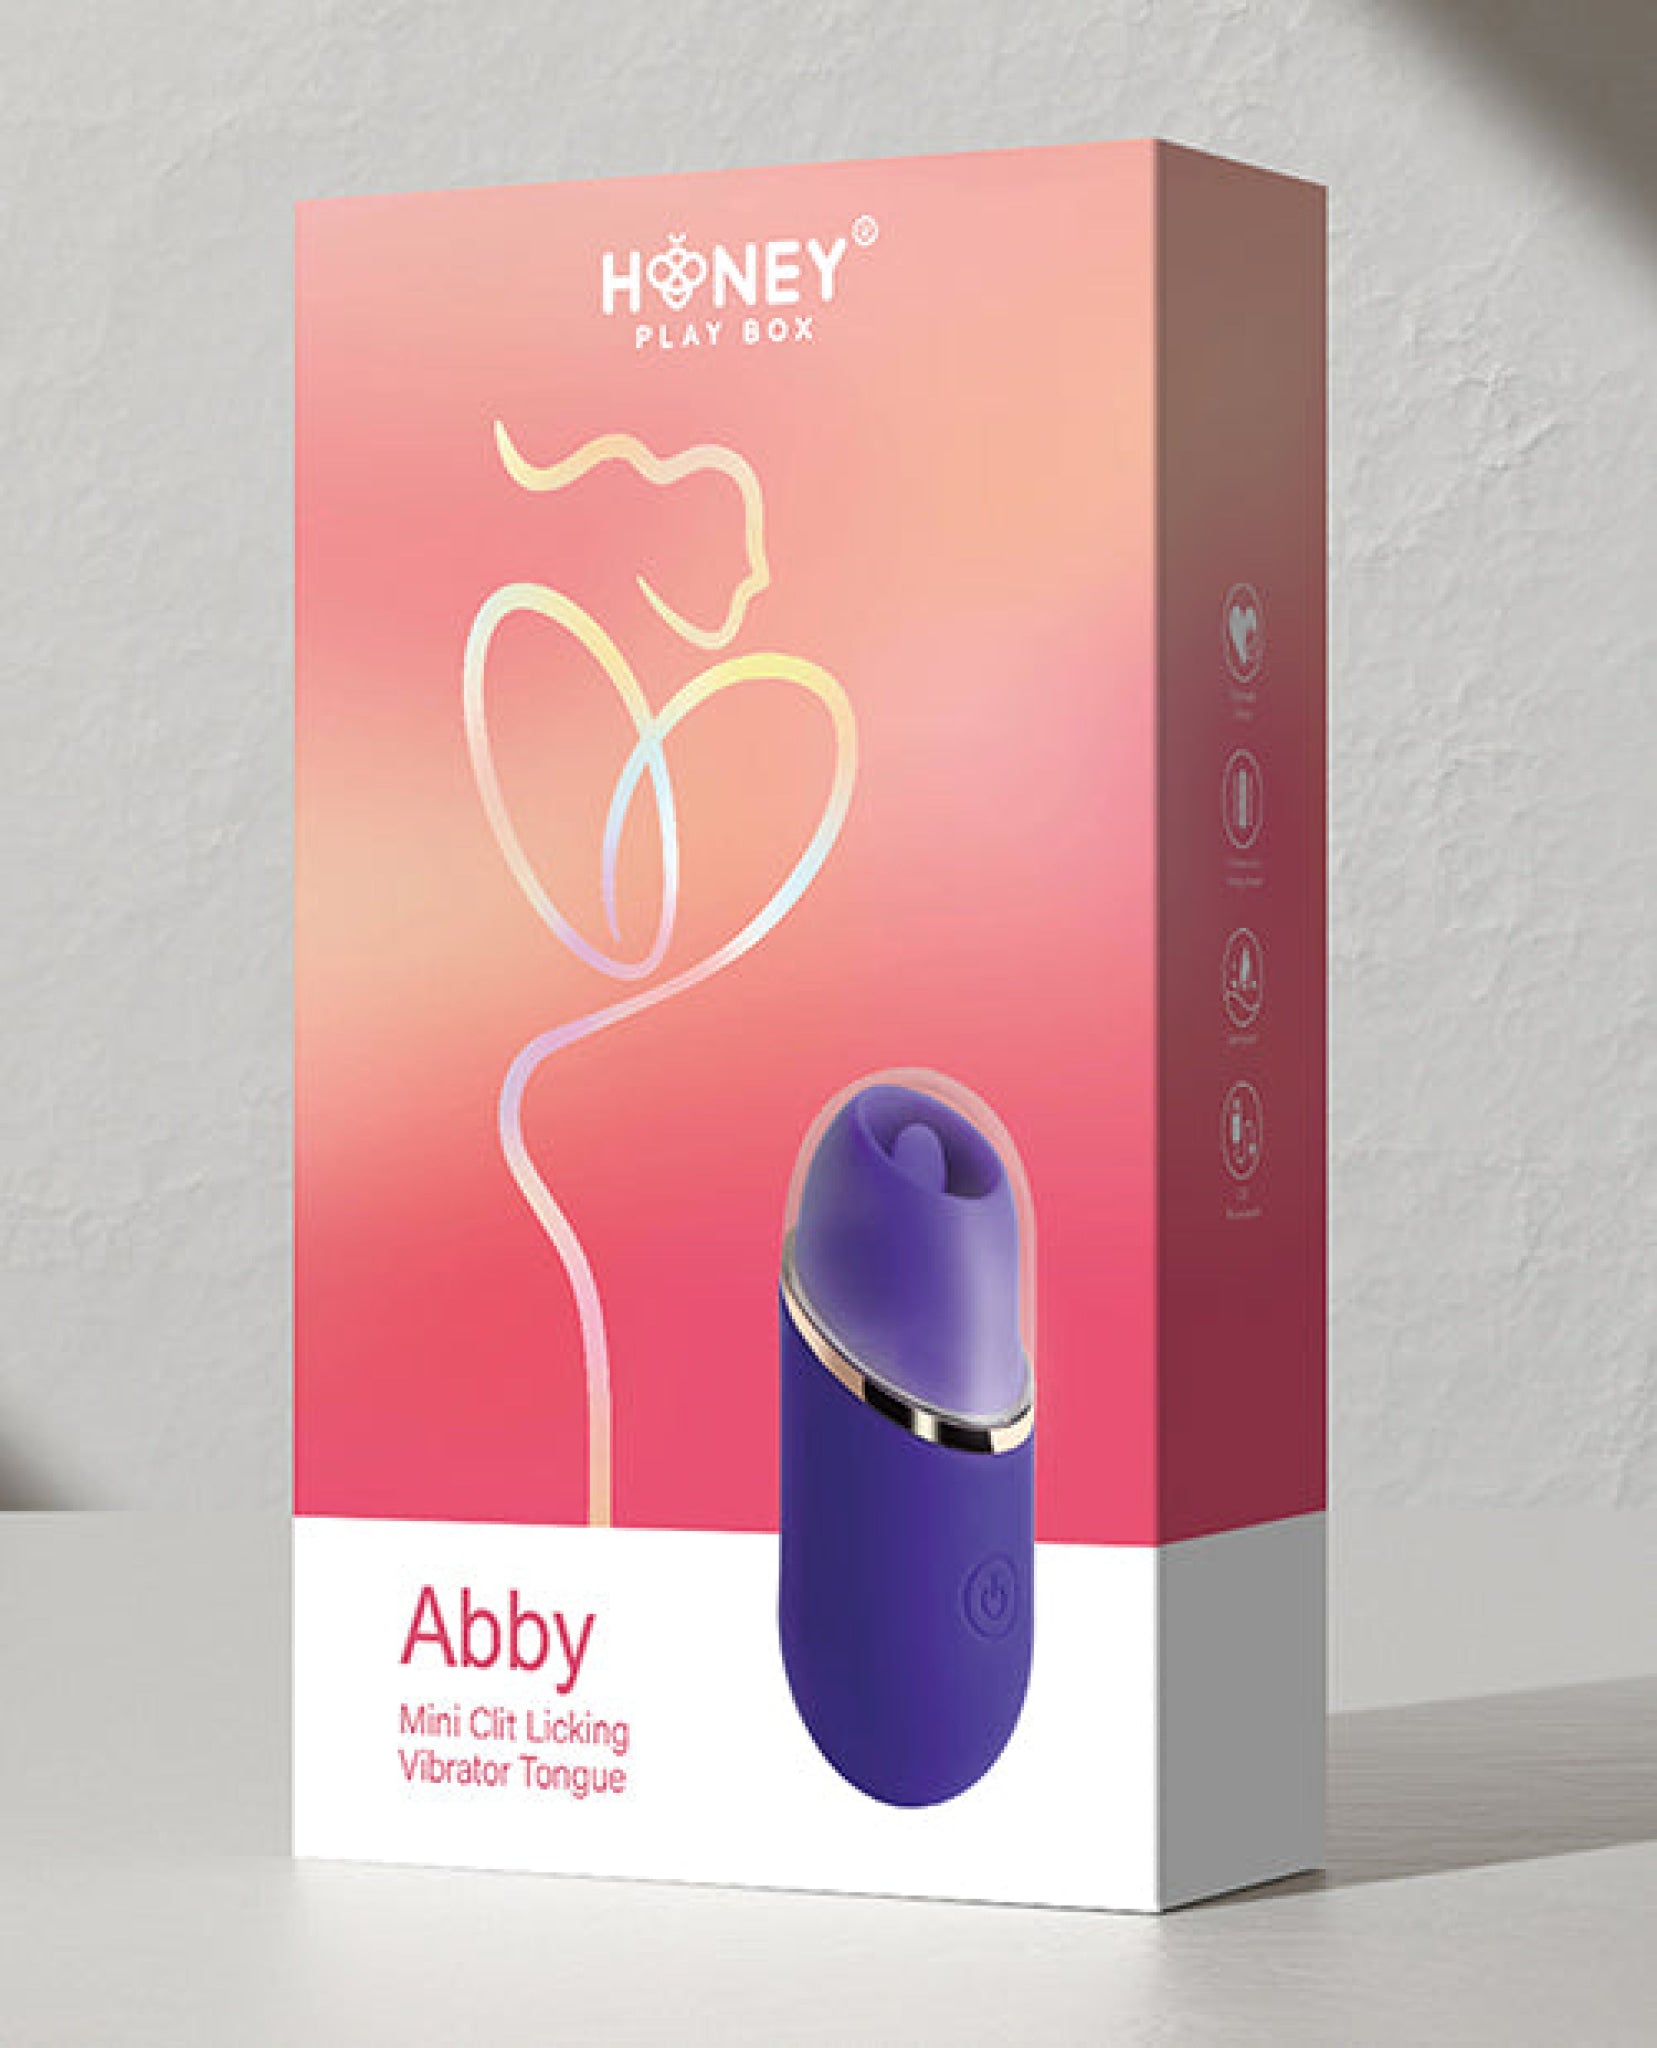 Abby Mini Clit Licking Vibrator Tongue Sex Toy - Purple Uc Global Trade